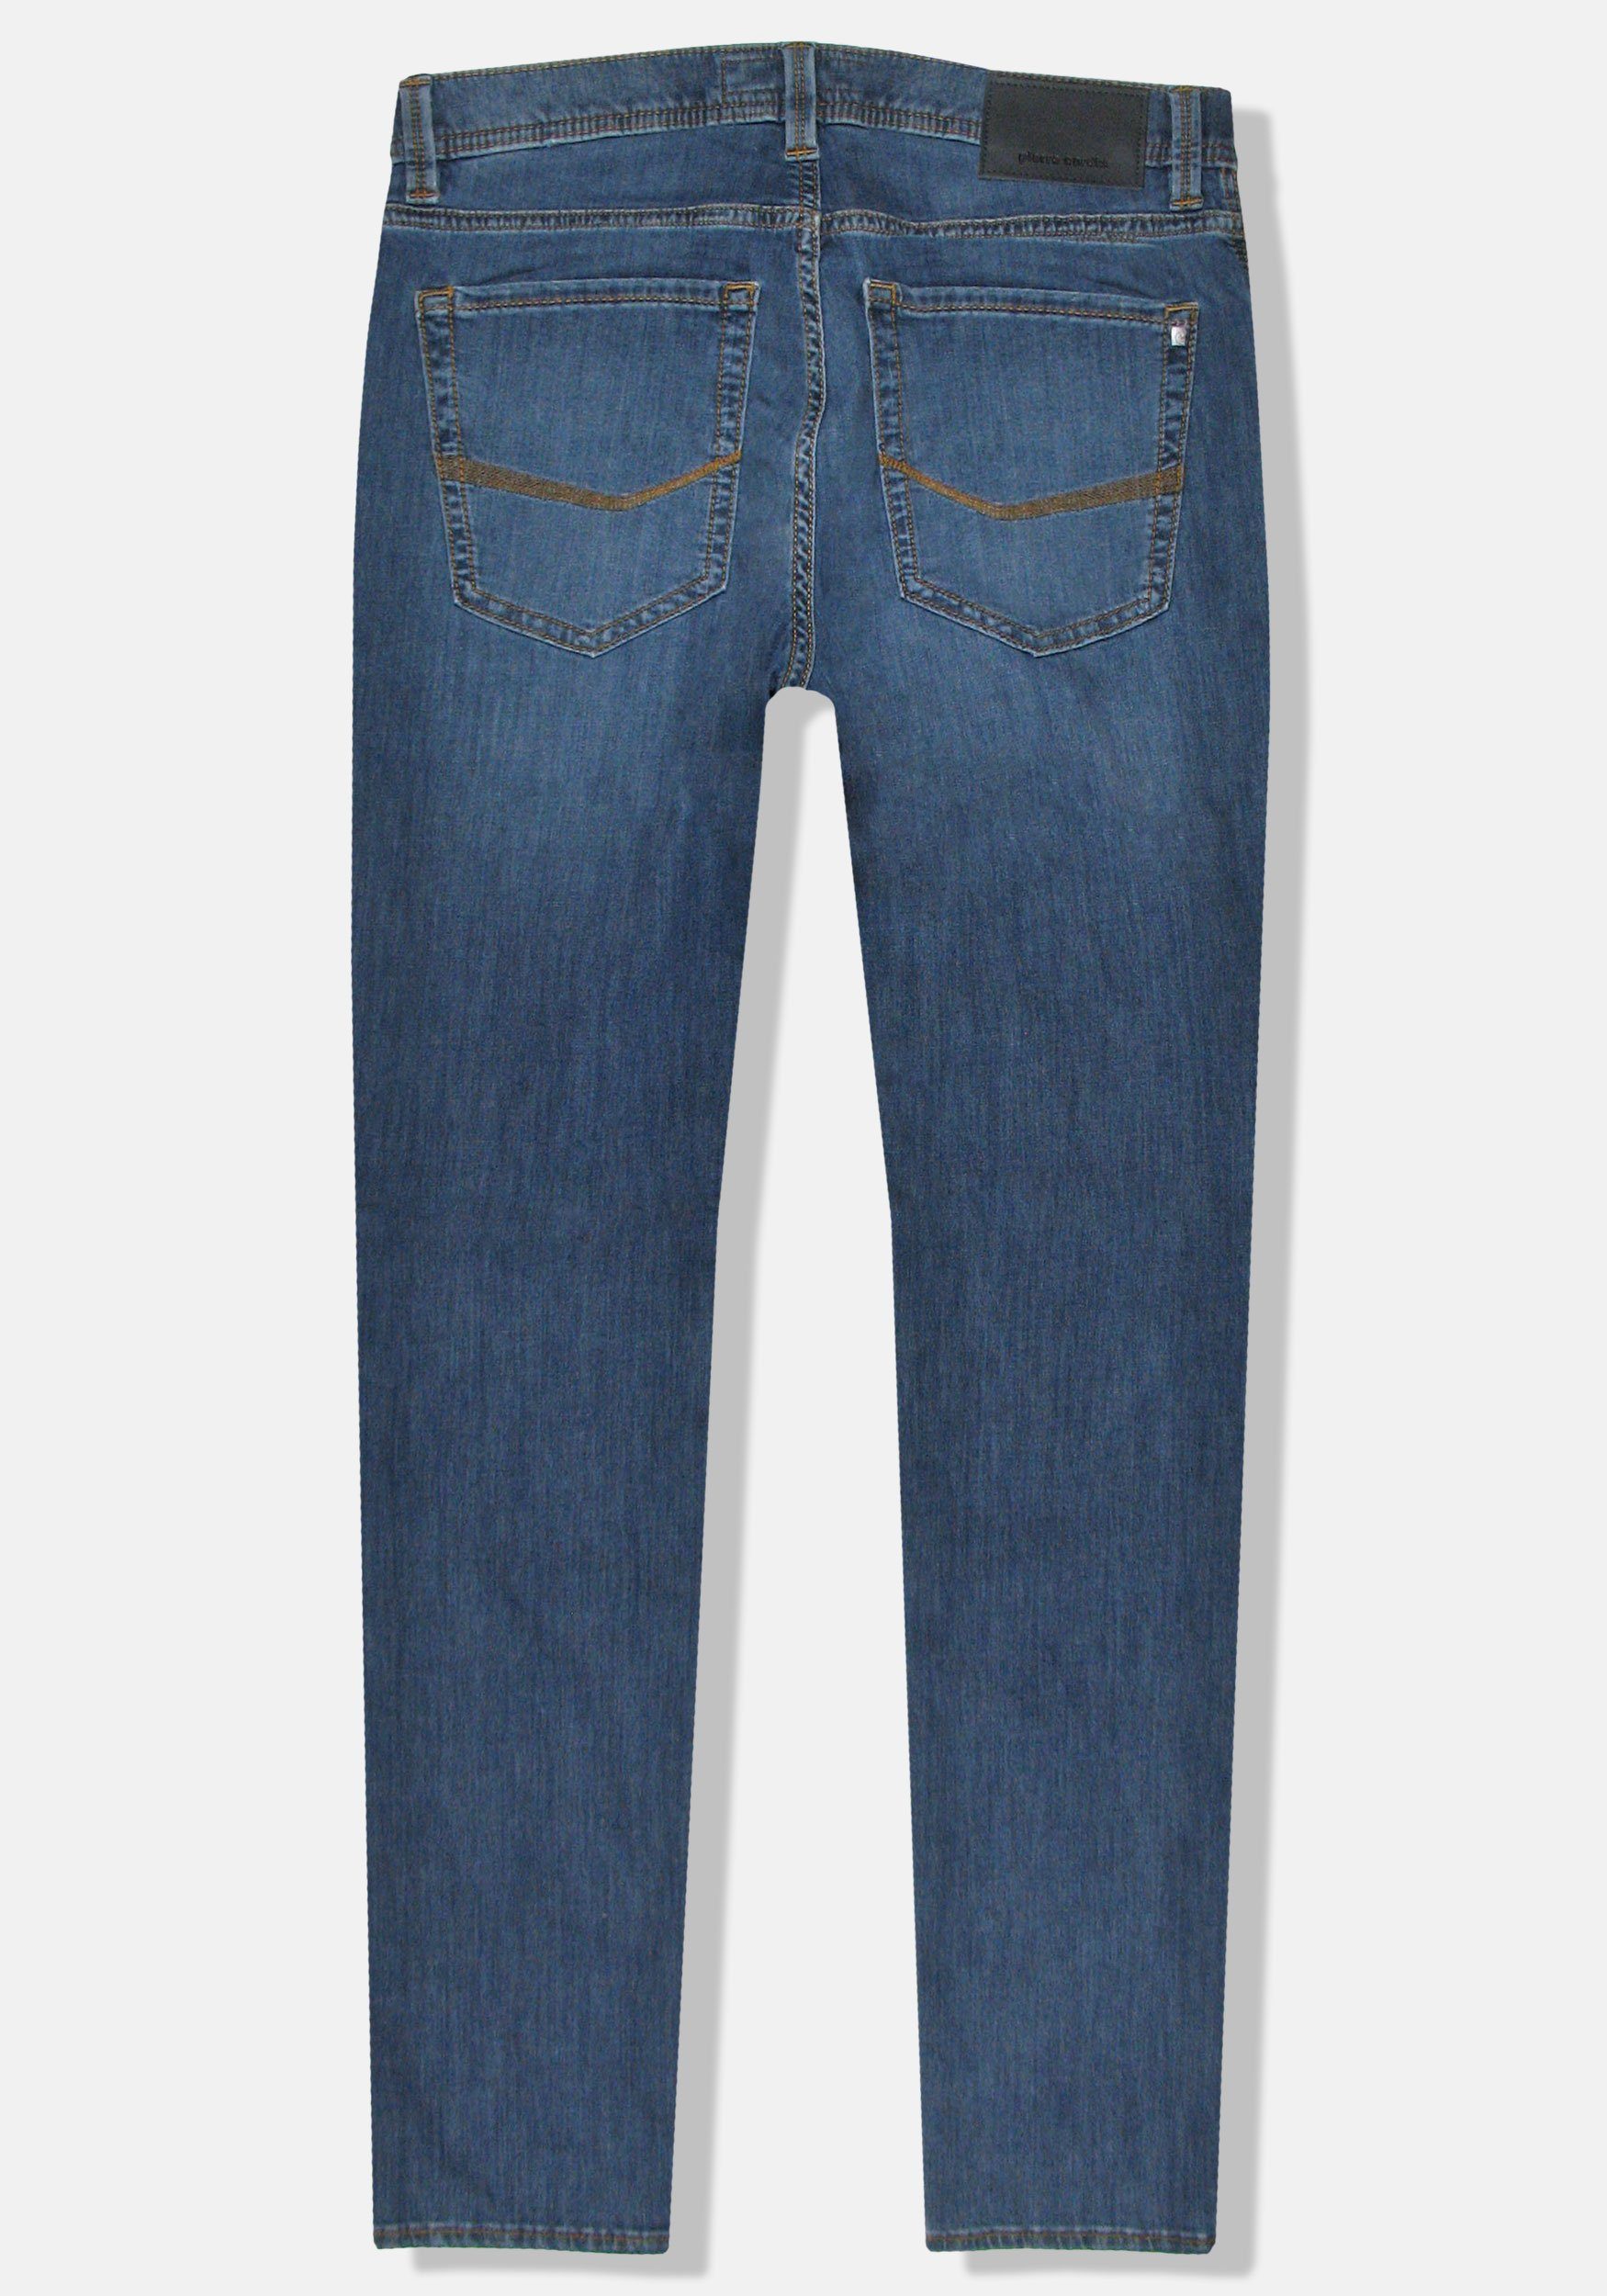 Dark Blue 5-Pocket-Jeans Vintage Futureflex Denim Stretch Lyon Cardin Pierre Used Tapered